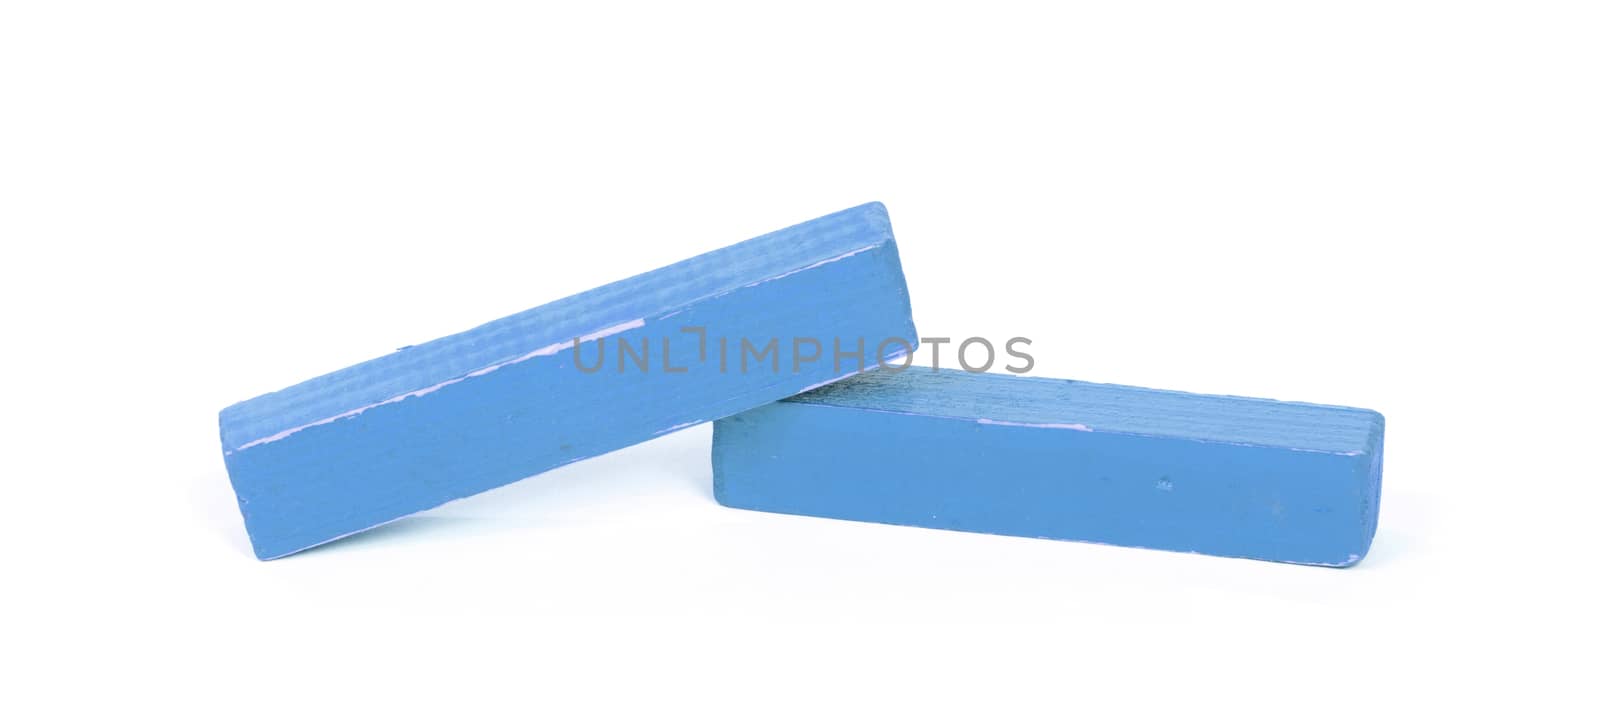 Vintage blue building blocks isolated on white background